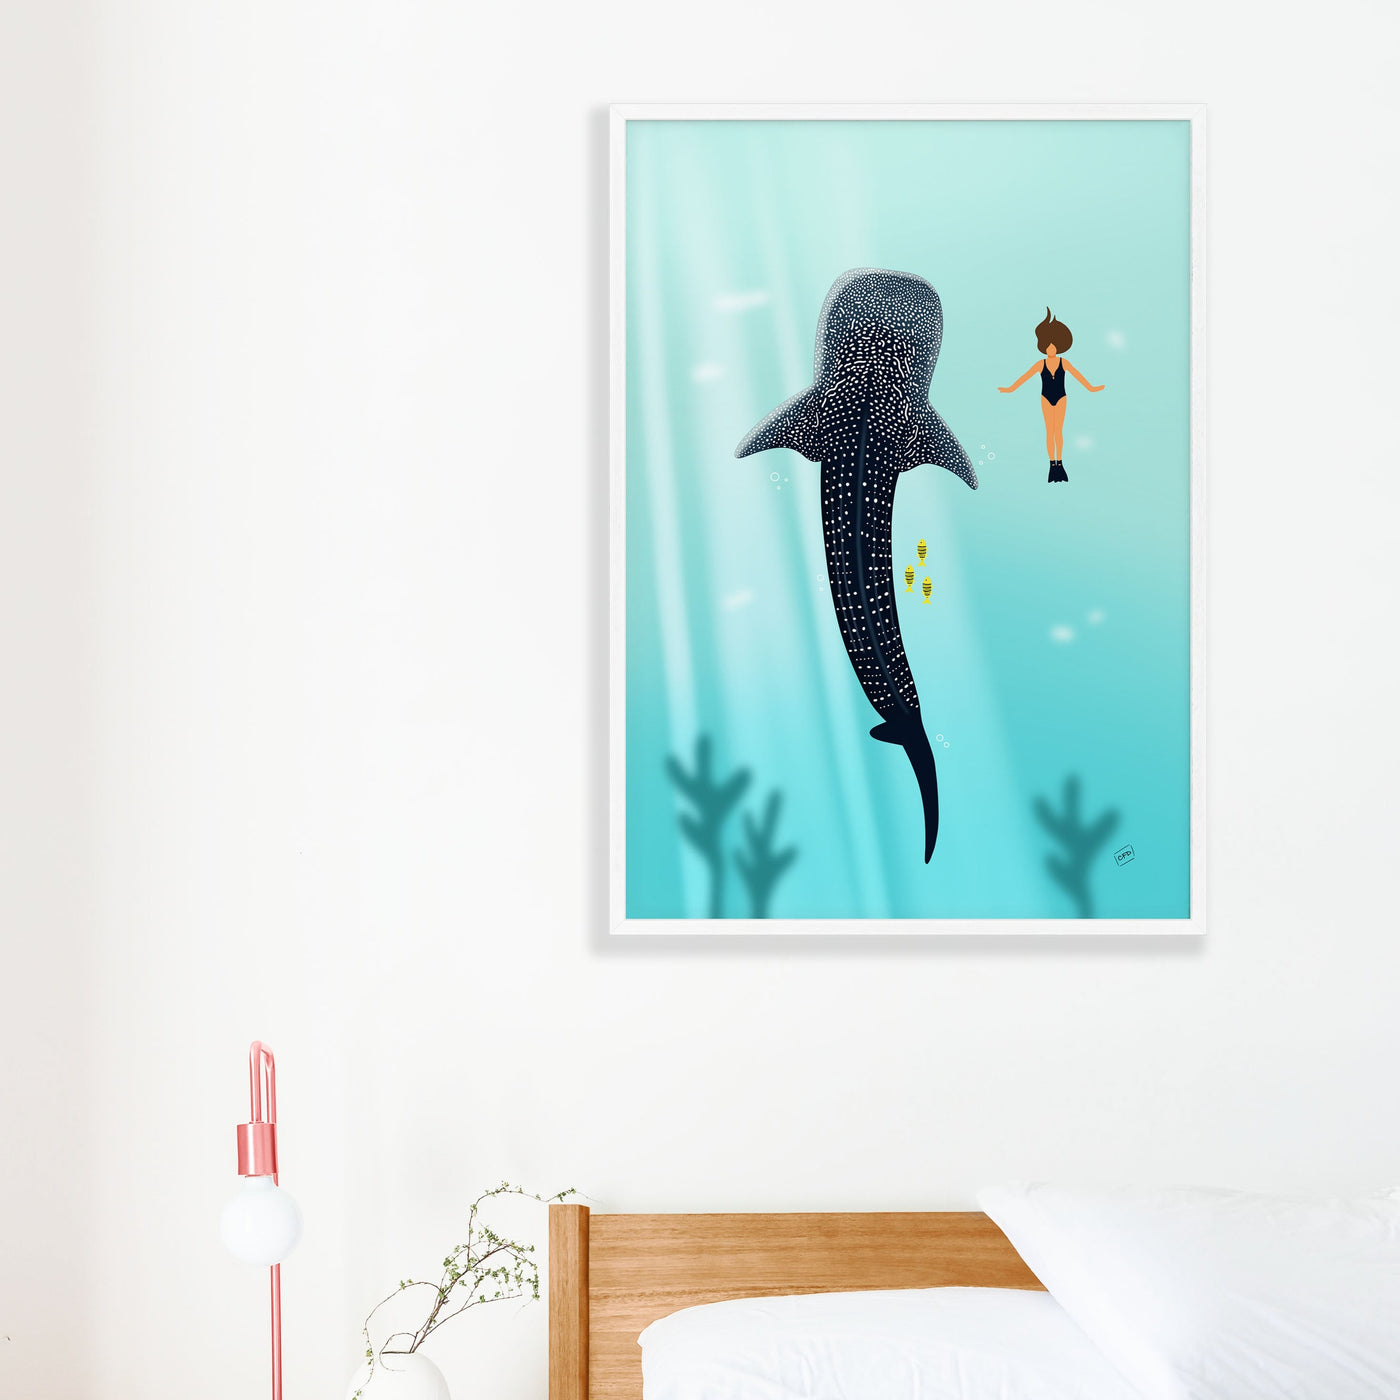 Whale Shark Print